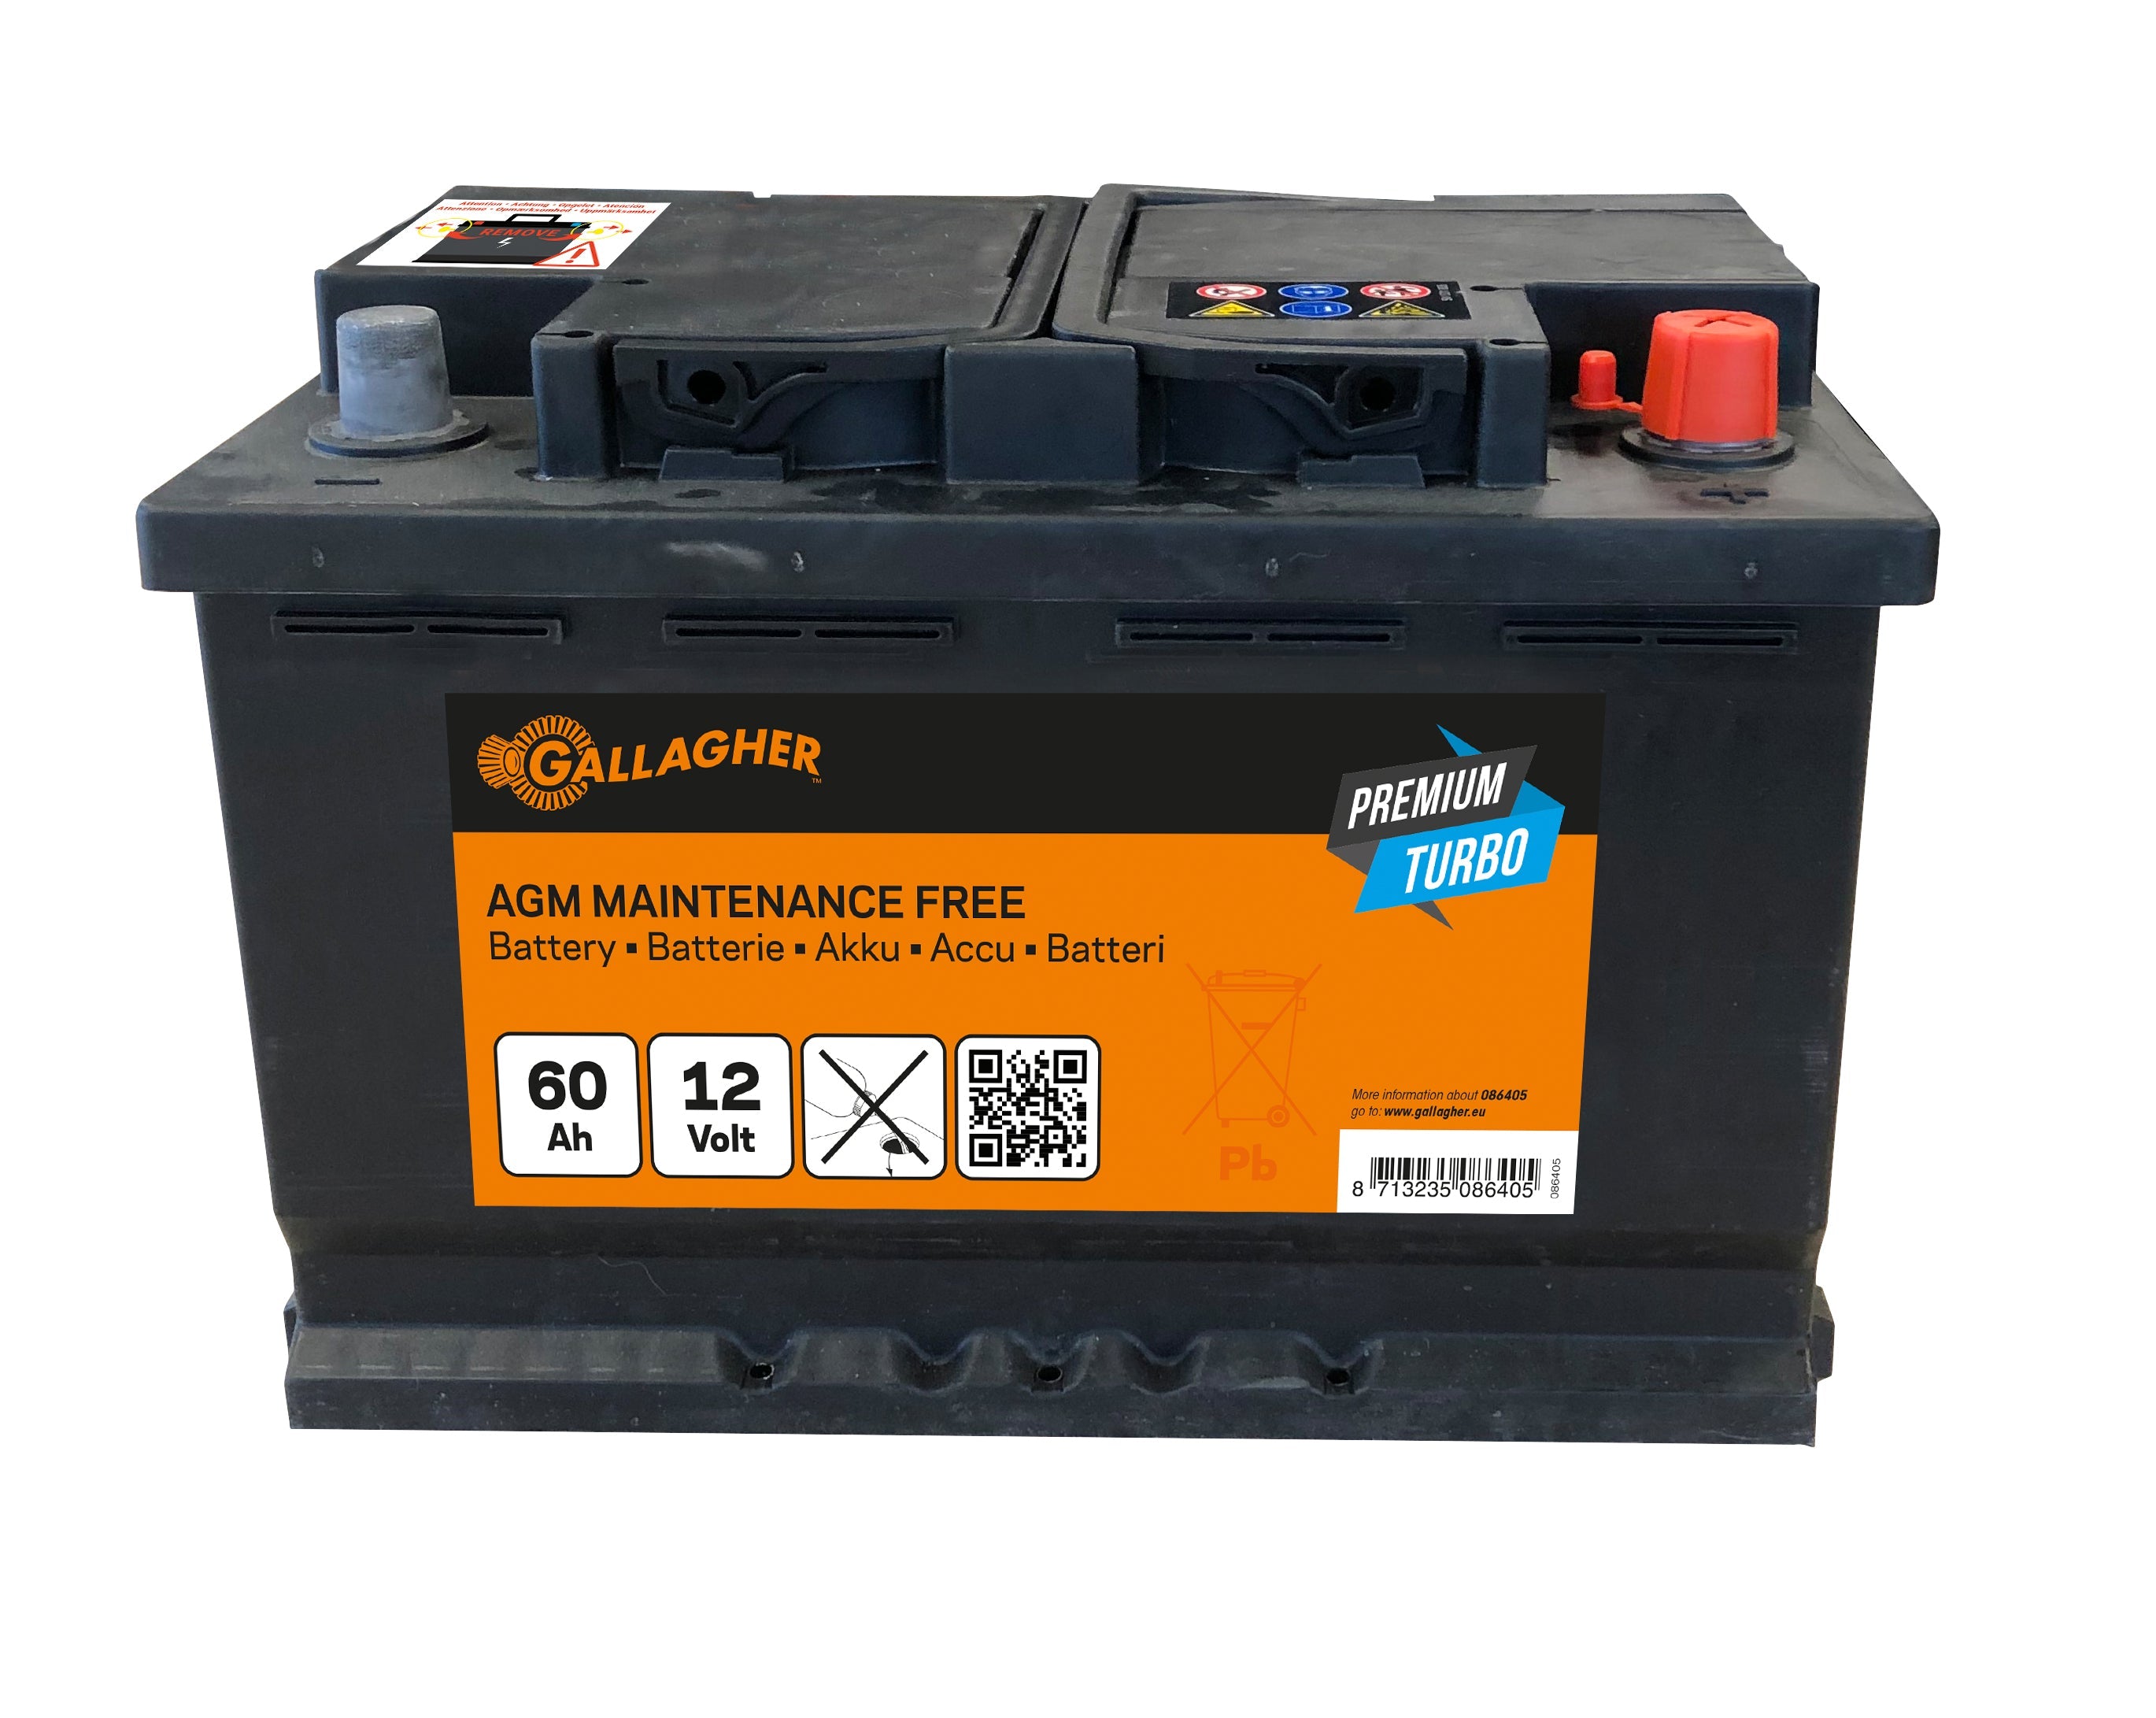 Battery 12V/60Ah Premium Turbo AGM - 242x175x190